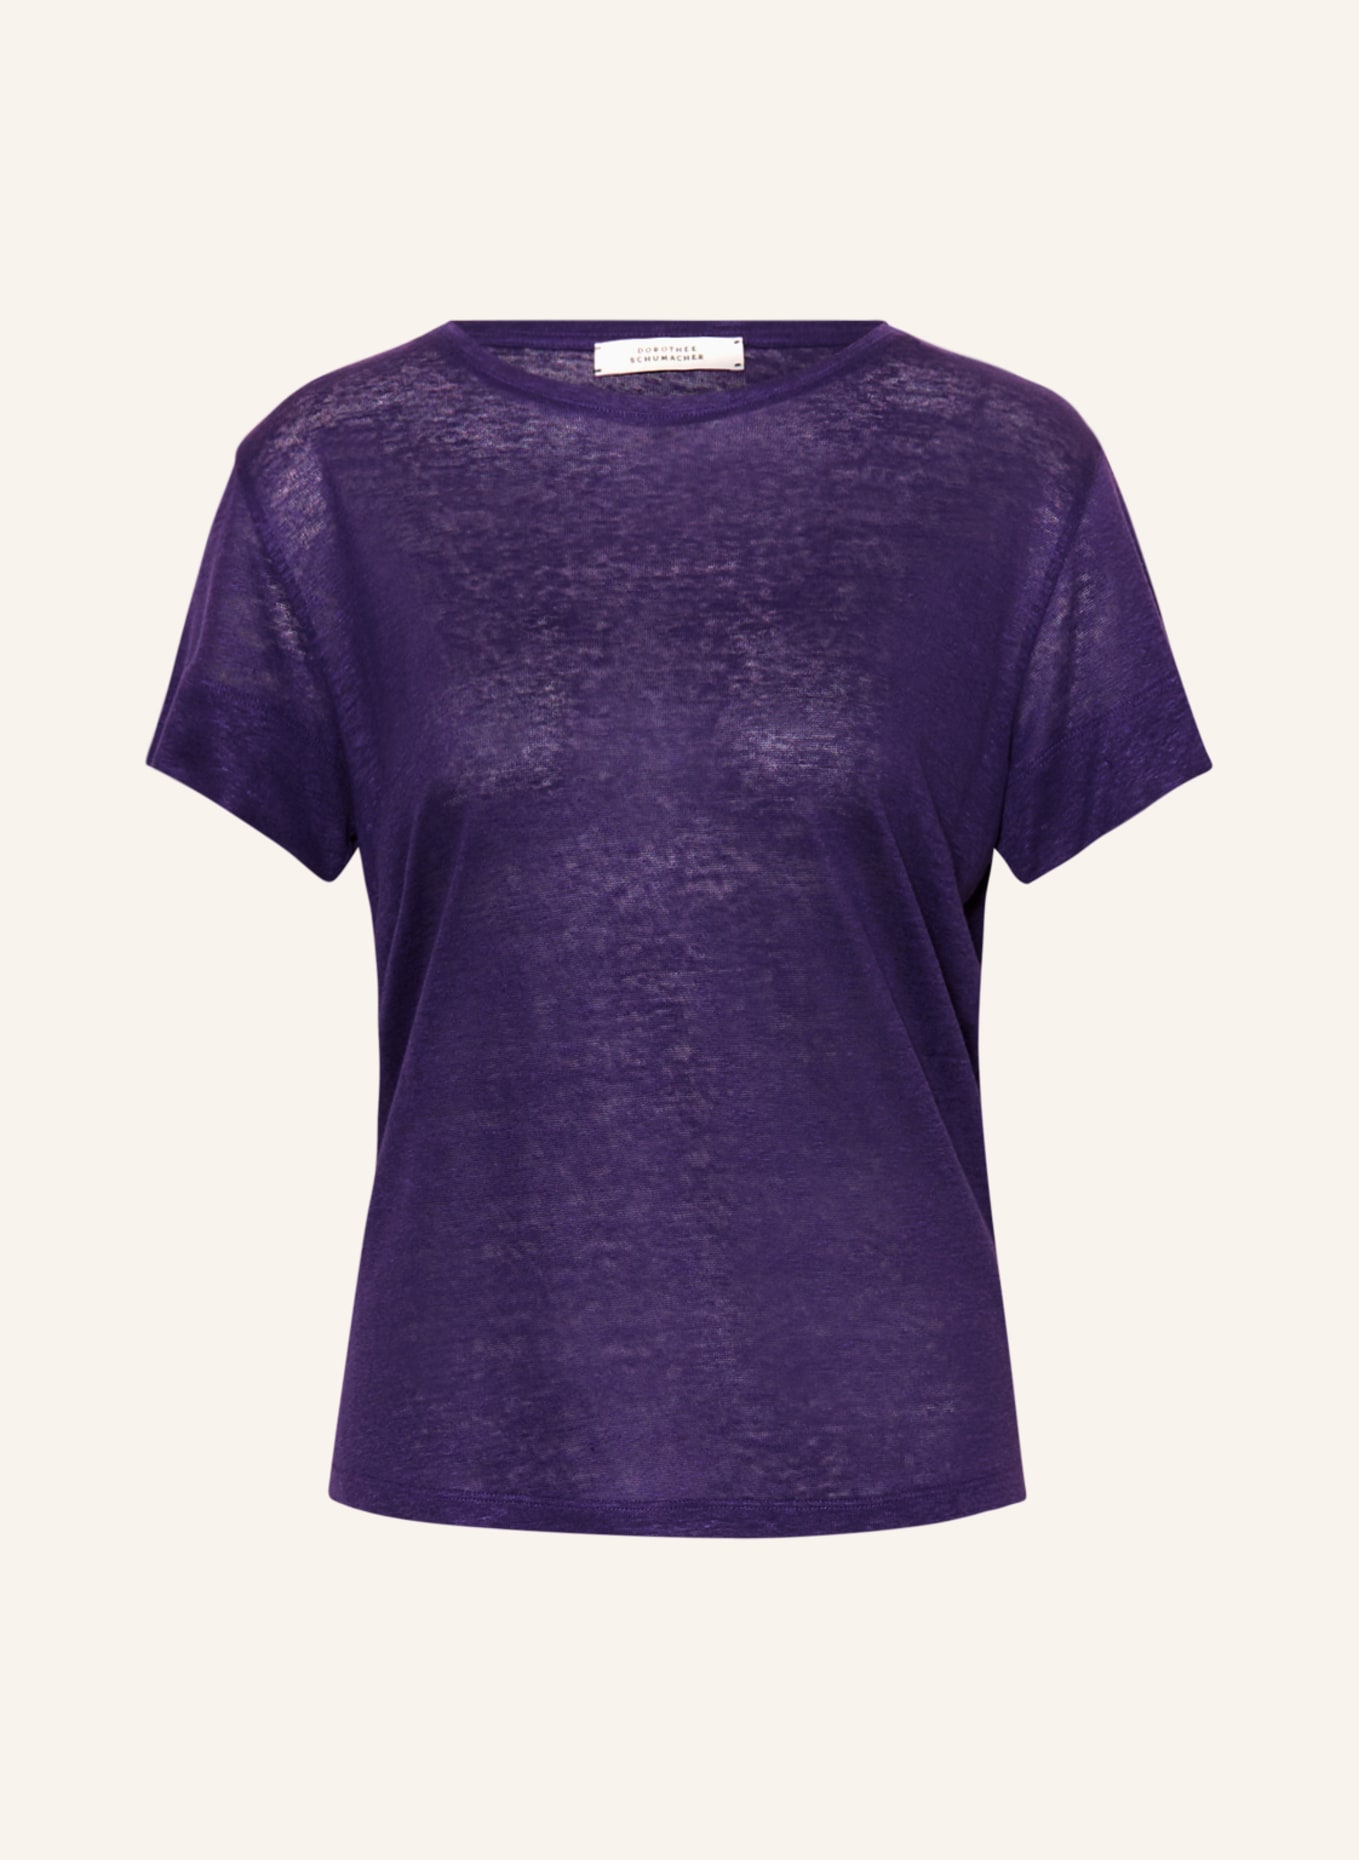 DOROTHEE SCHUMACHER T-Shirt, Farbe: LILA (Bild 1)